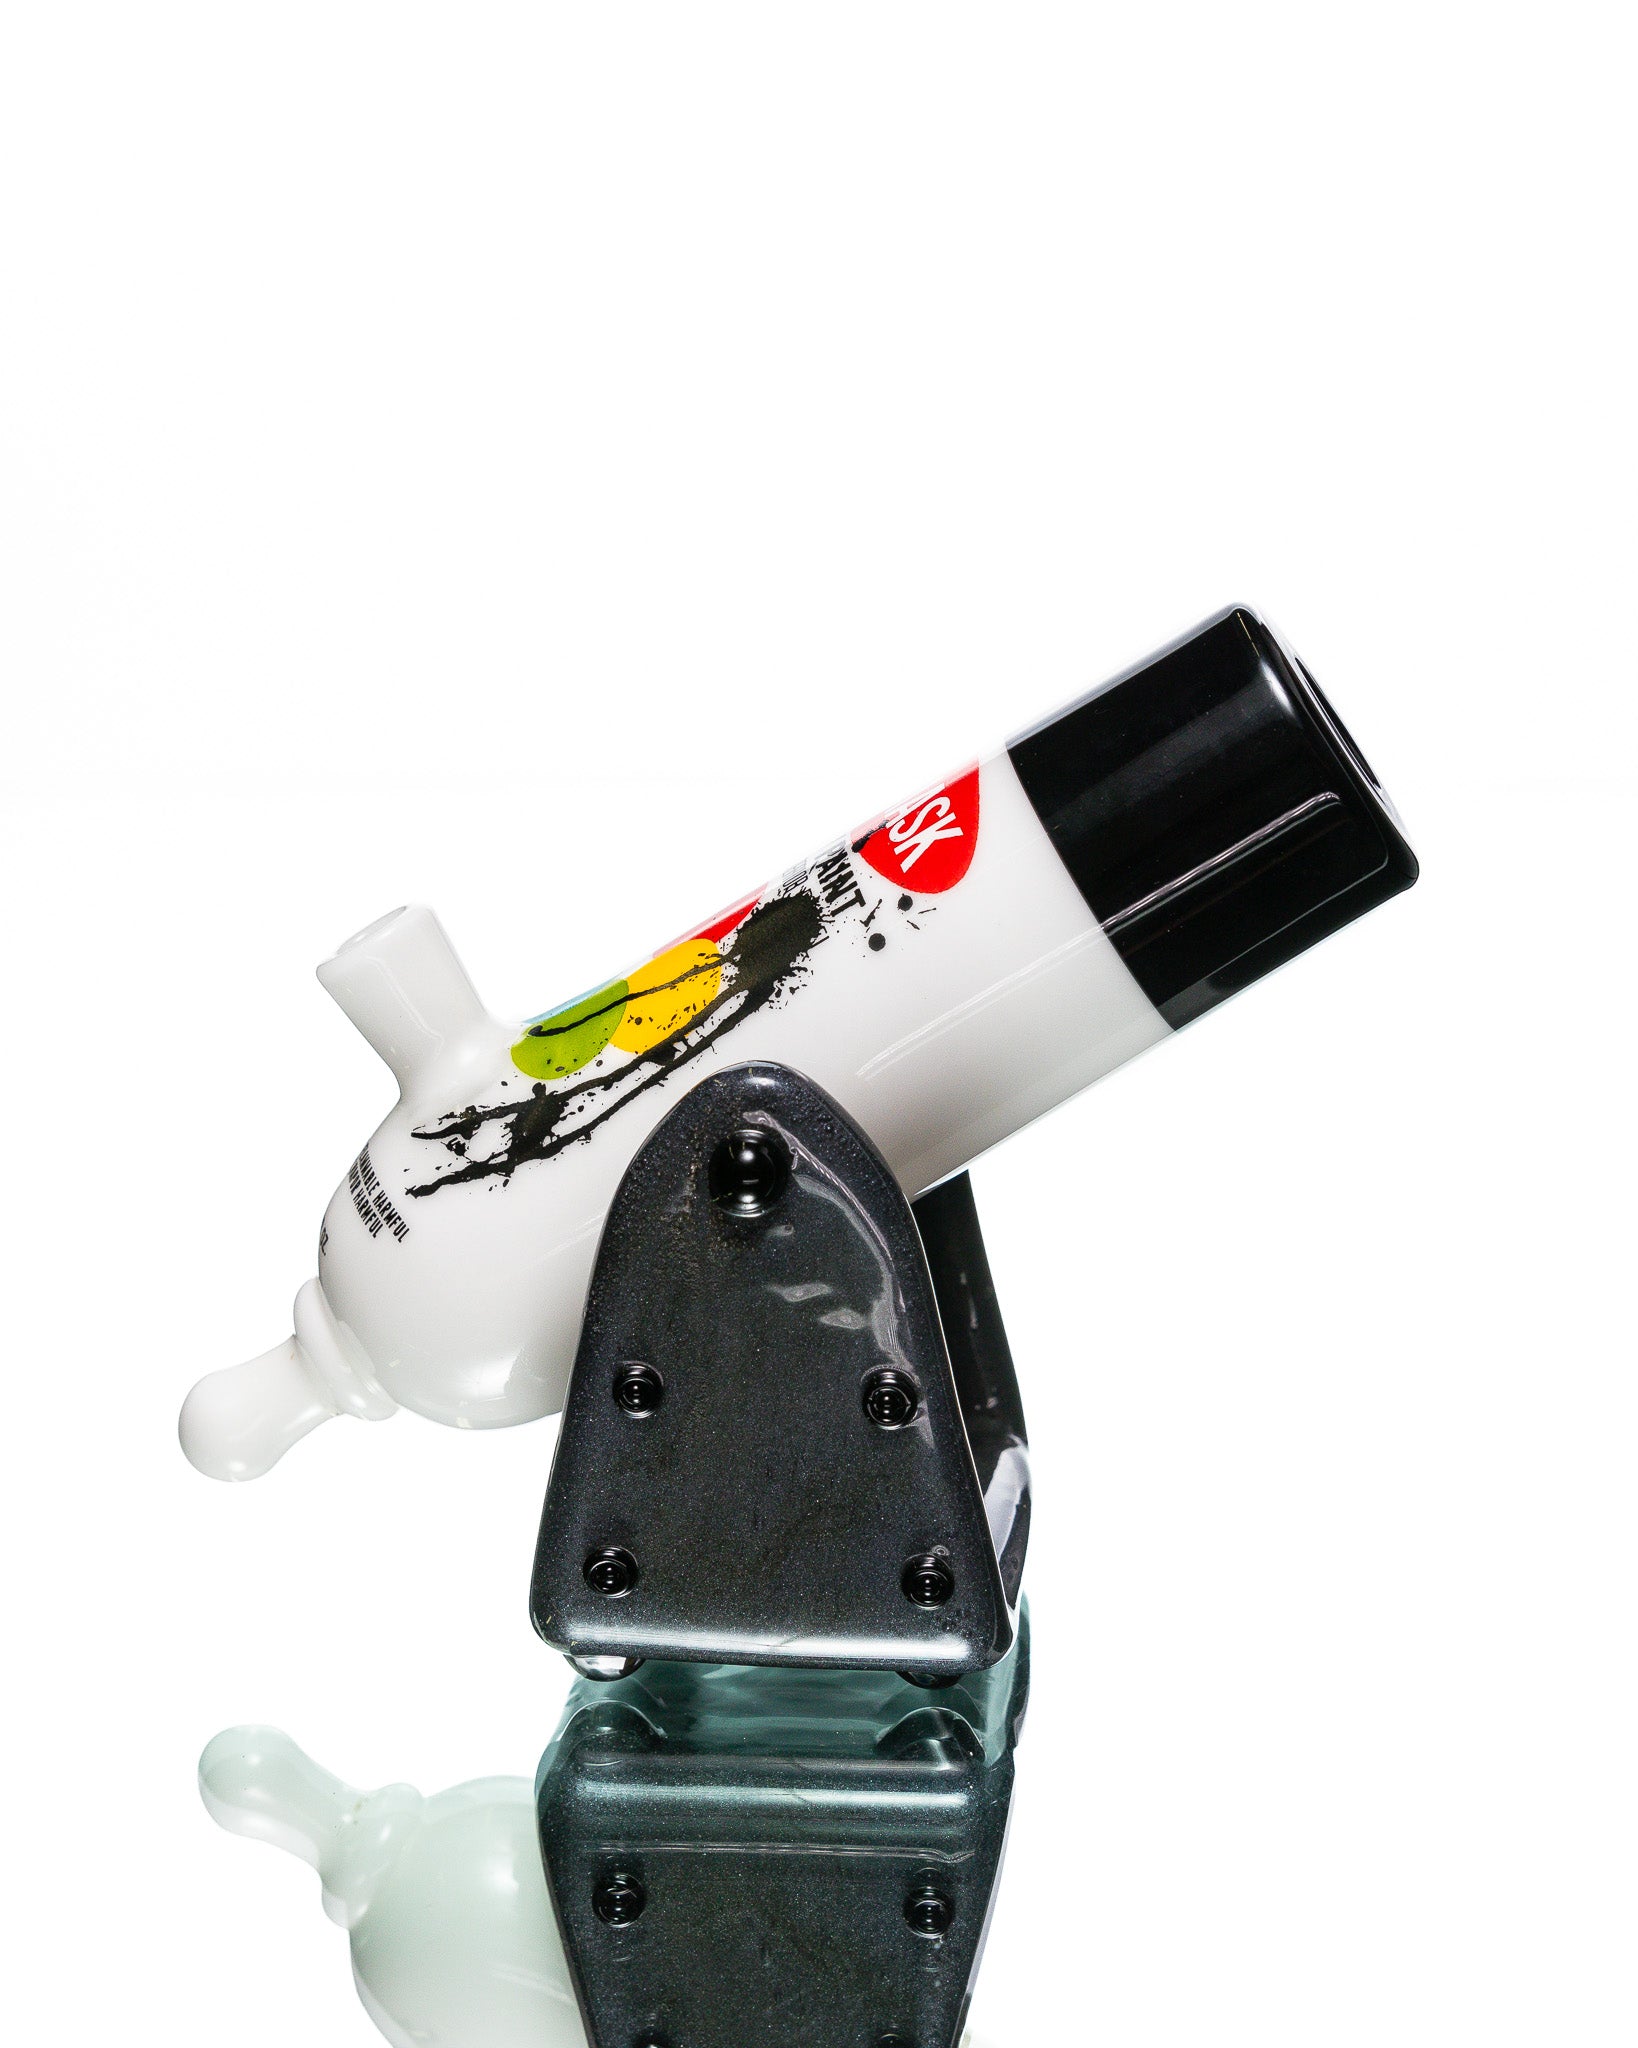 Chadd Lacy x Skimask - "Spray Canon"